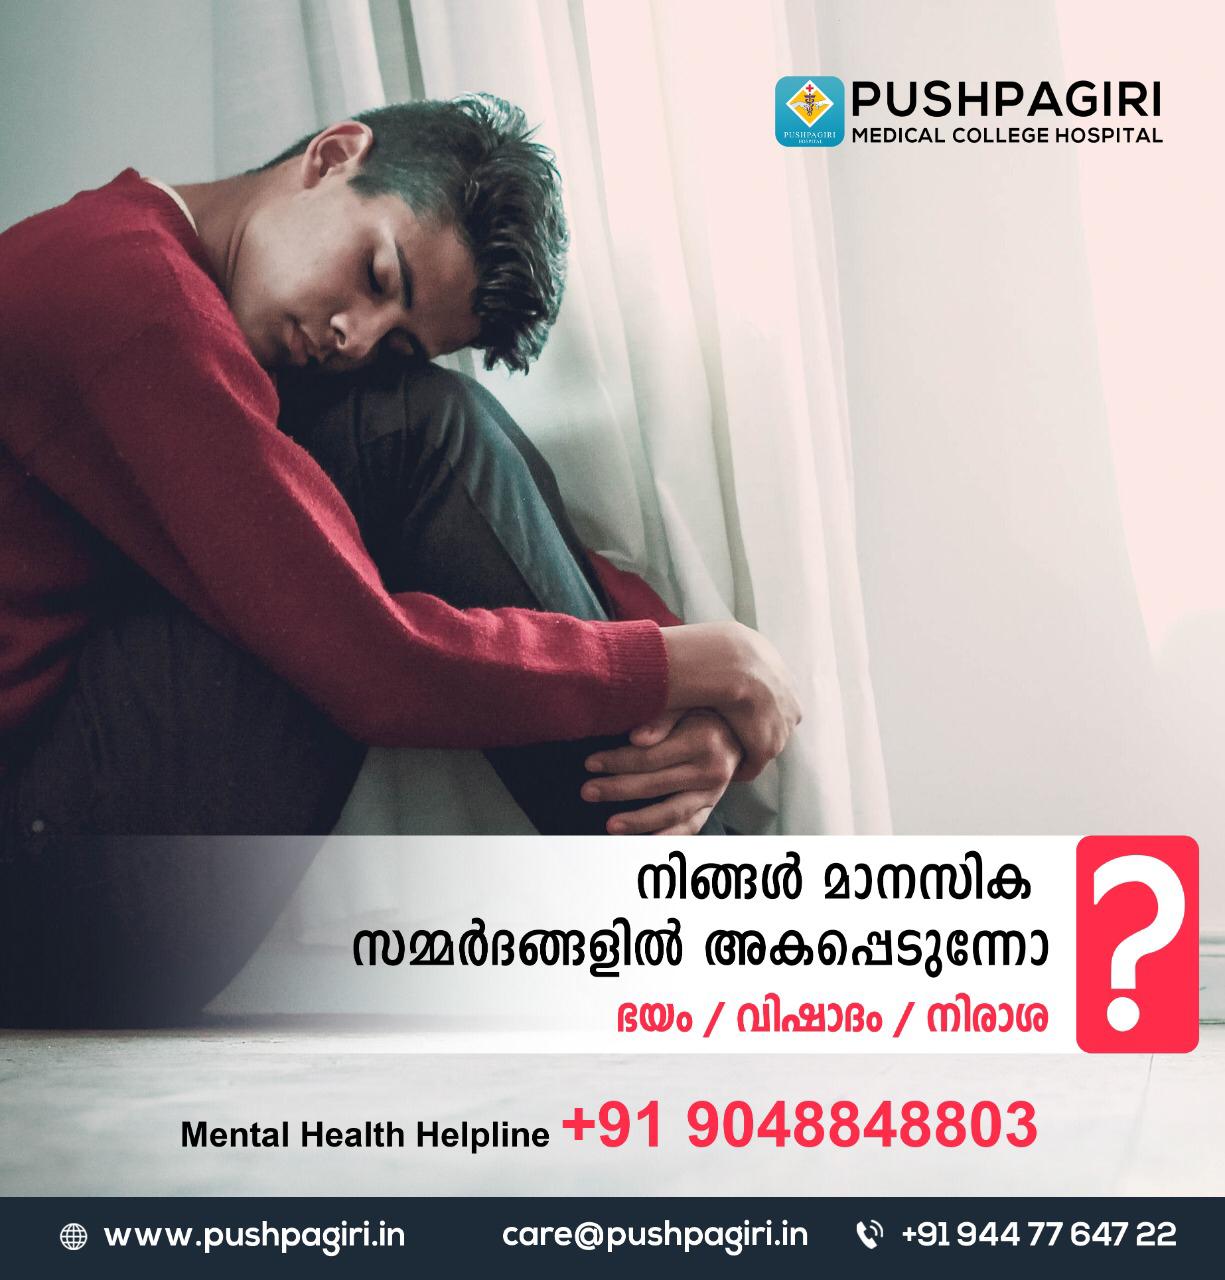 Pushpagiri Psychiatric Department - Helpline